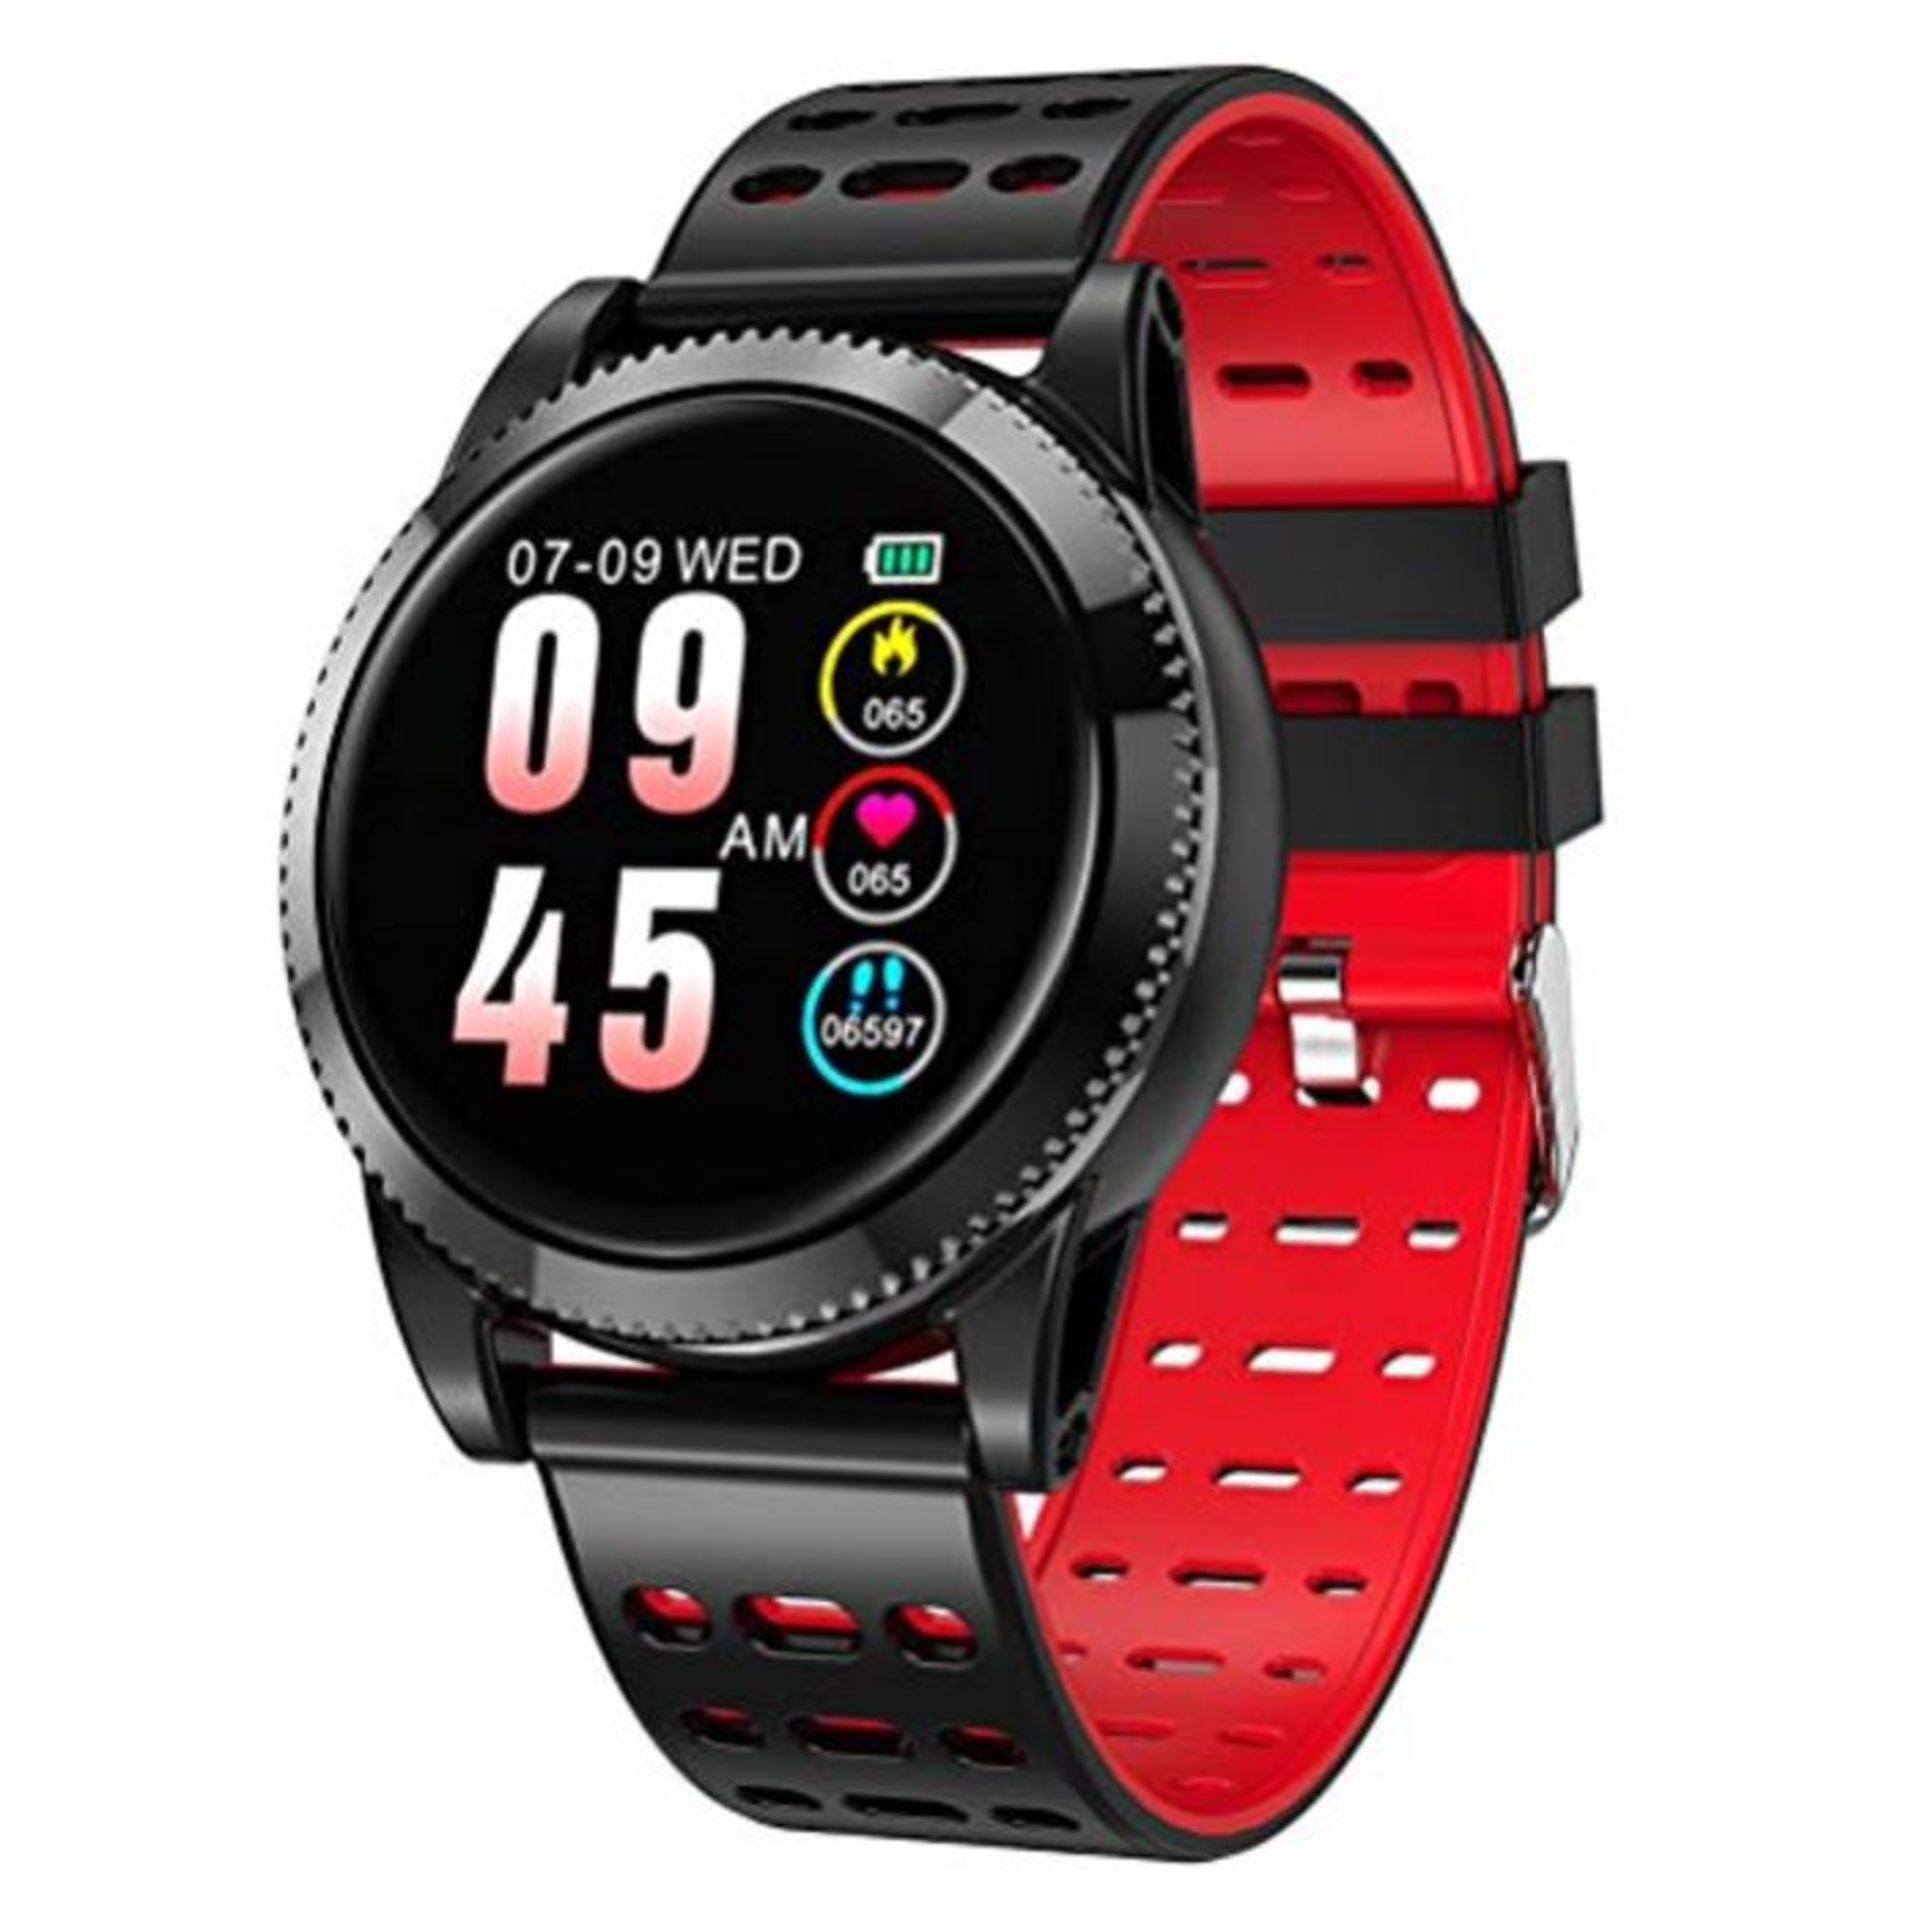 Smart Watch Fashion Touch Screen Smart Bracelet Activity Tracker, Blood Pressure Watch